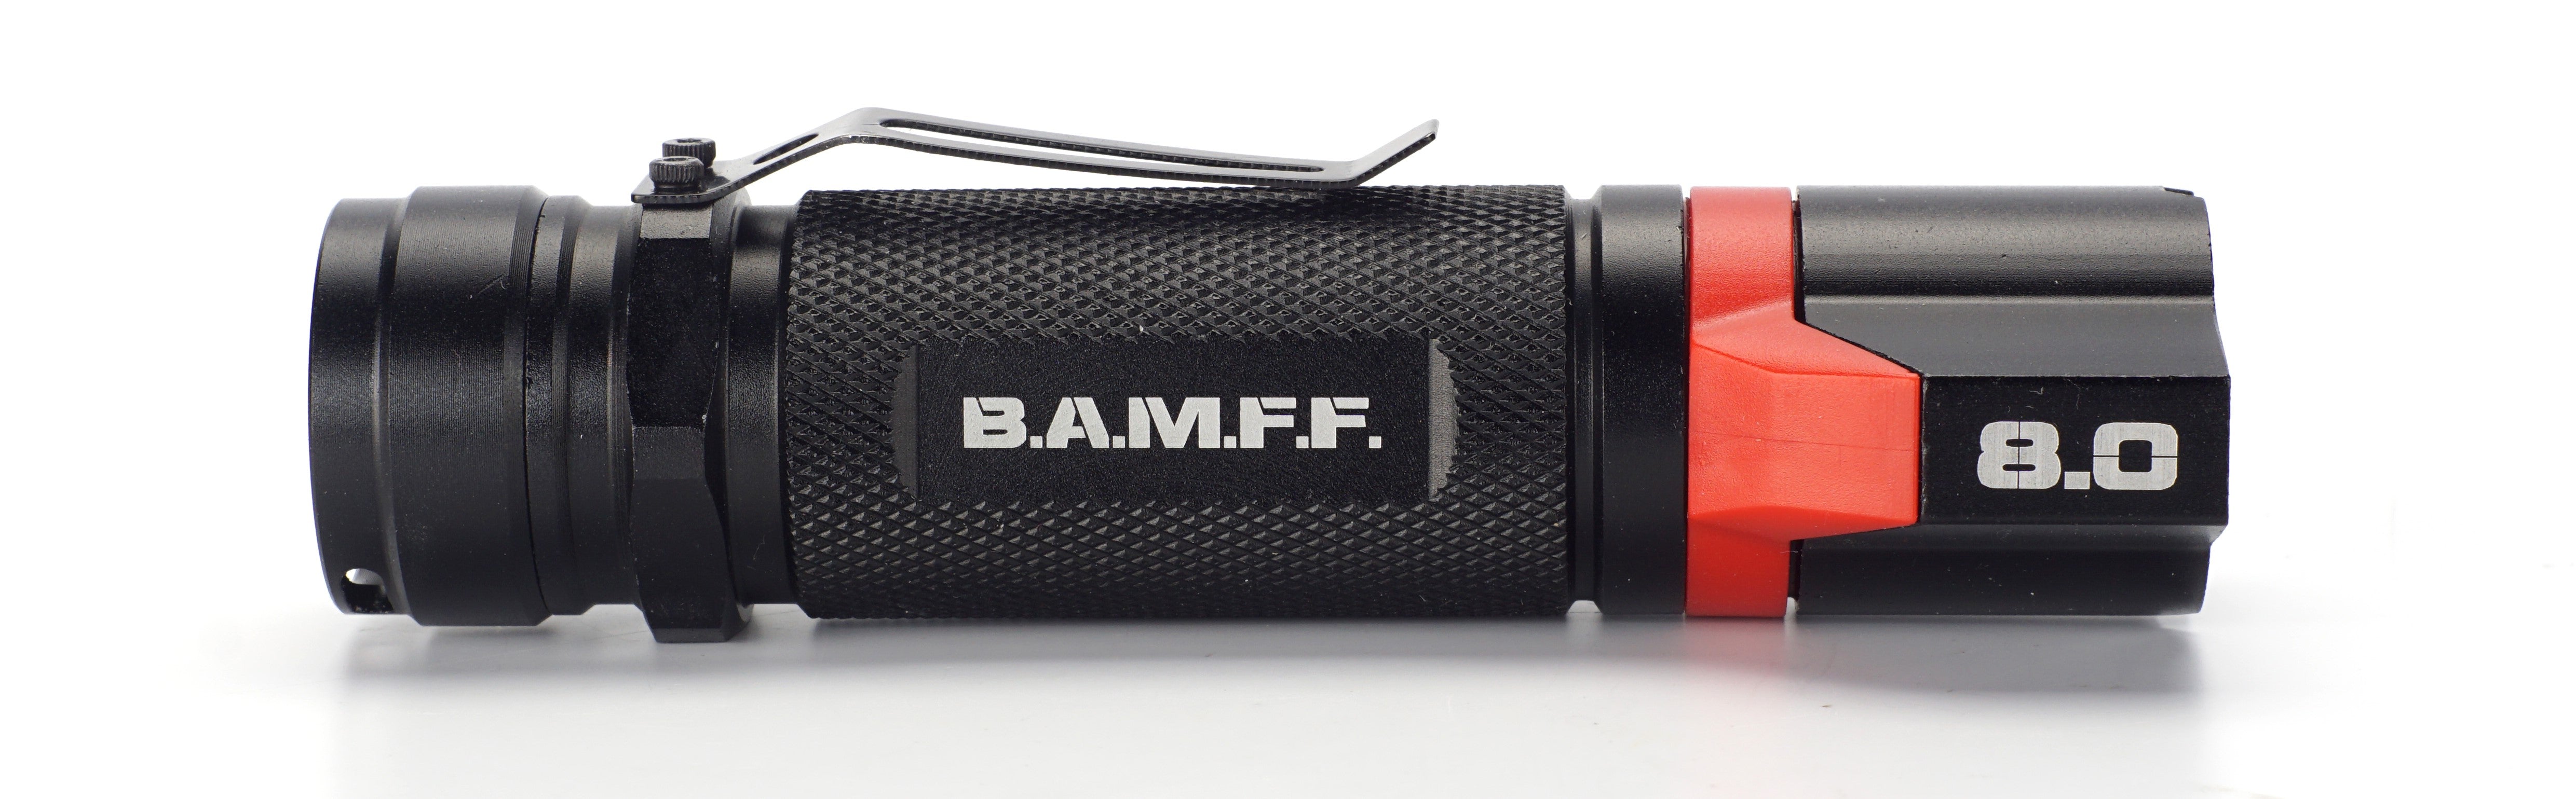 landscape side shot of a BAMFF 8.0 tactical flashlight